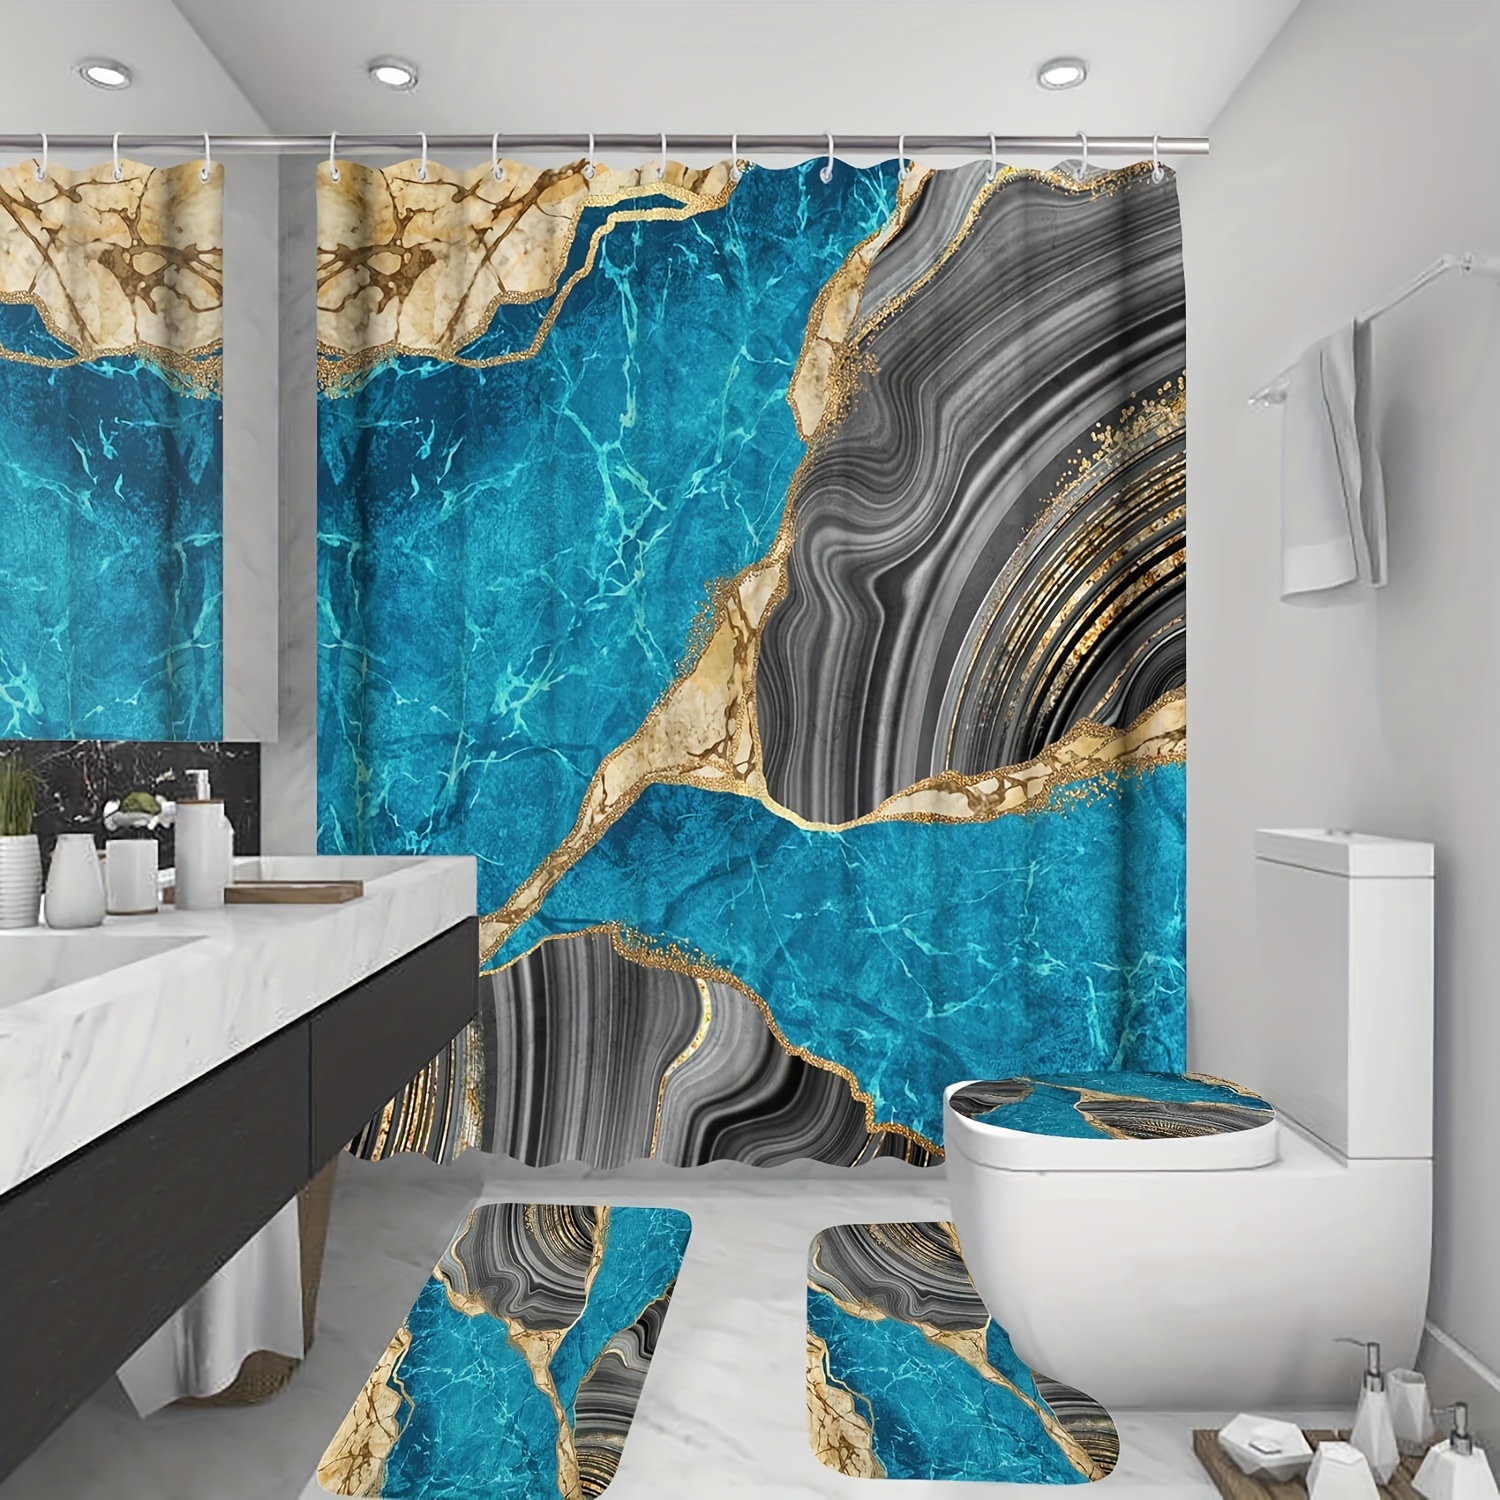 Juego de baño con cola de sirena azul con cortina de ducha, accesorios de  decoración de baño con alfombras antideslizantes, cubierta para tapa de